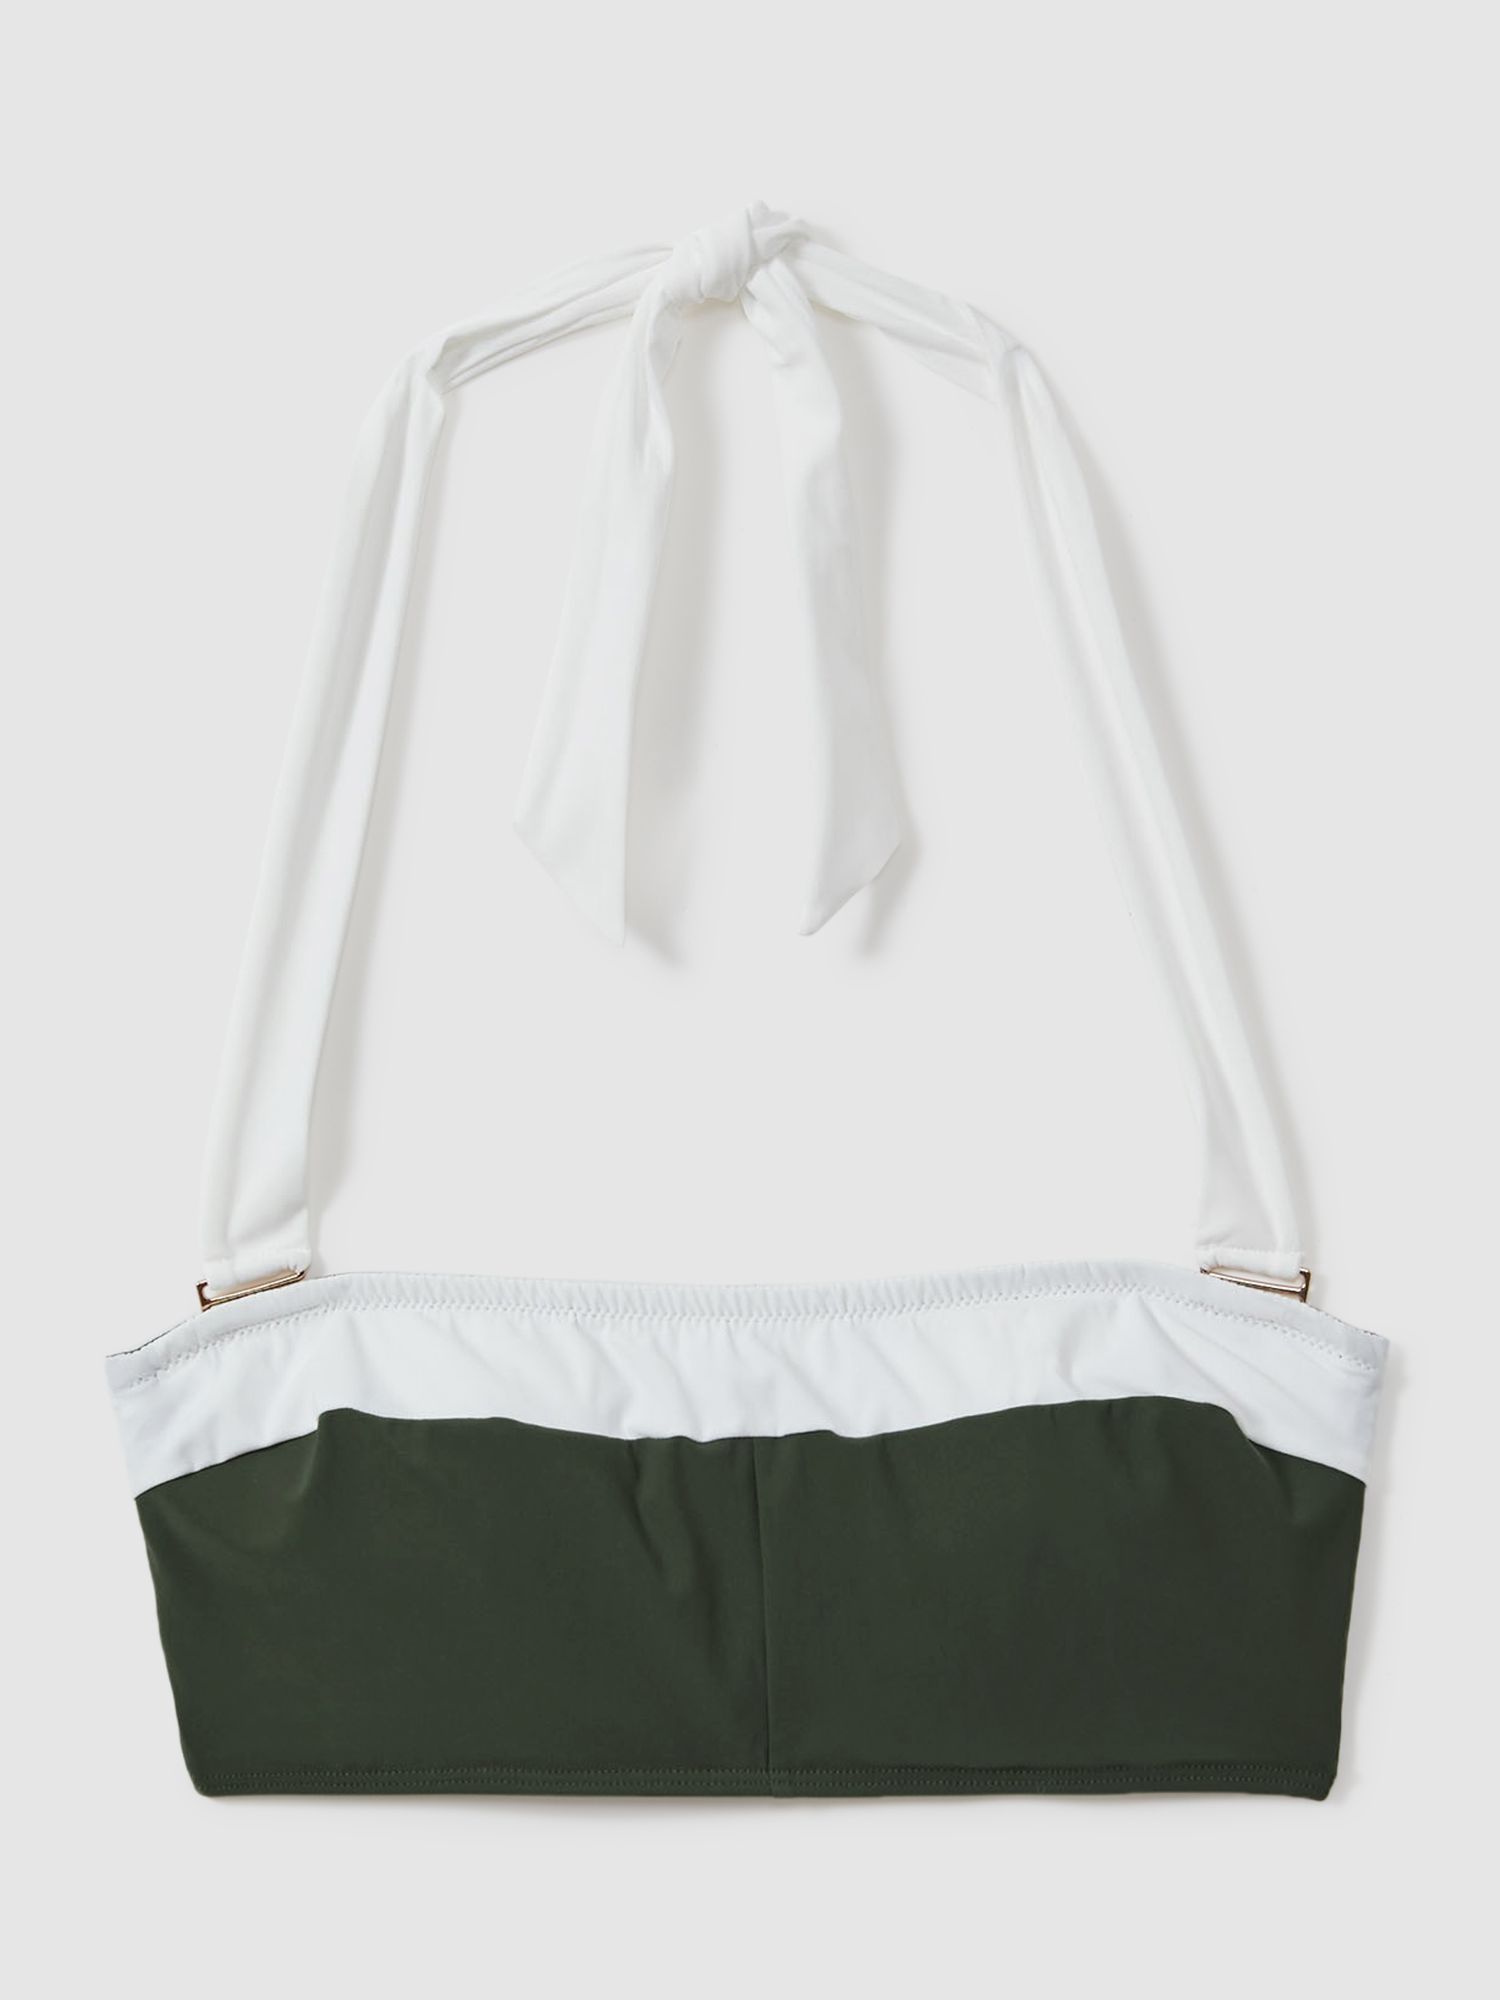 Reiss Nala Colour Block Underwired Bandeau Bikini Top, Dark Green/White, 6